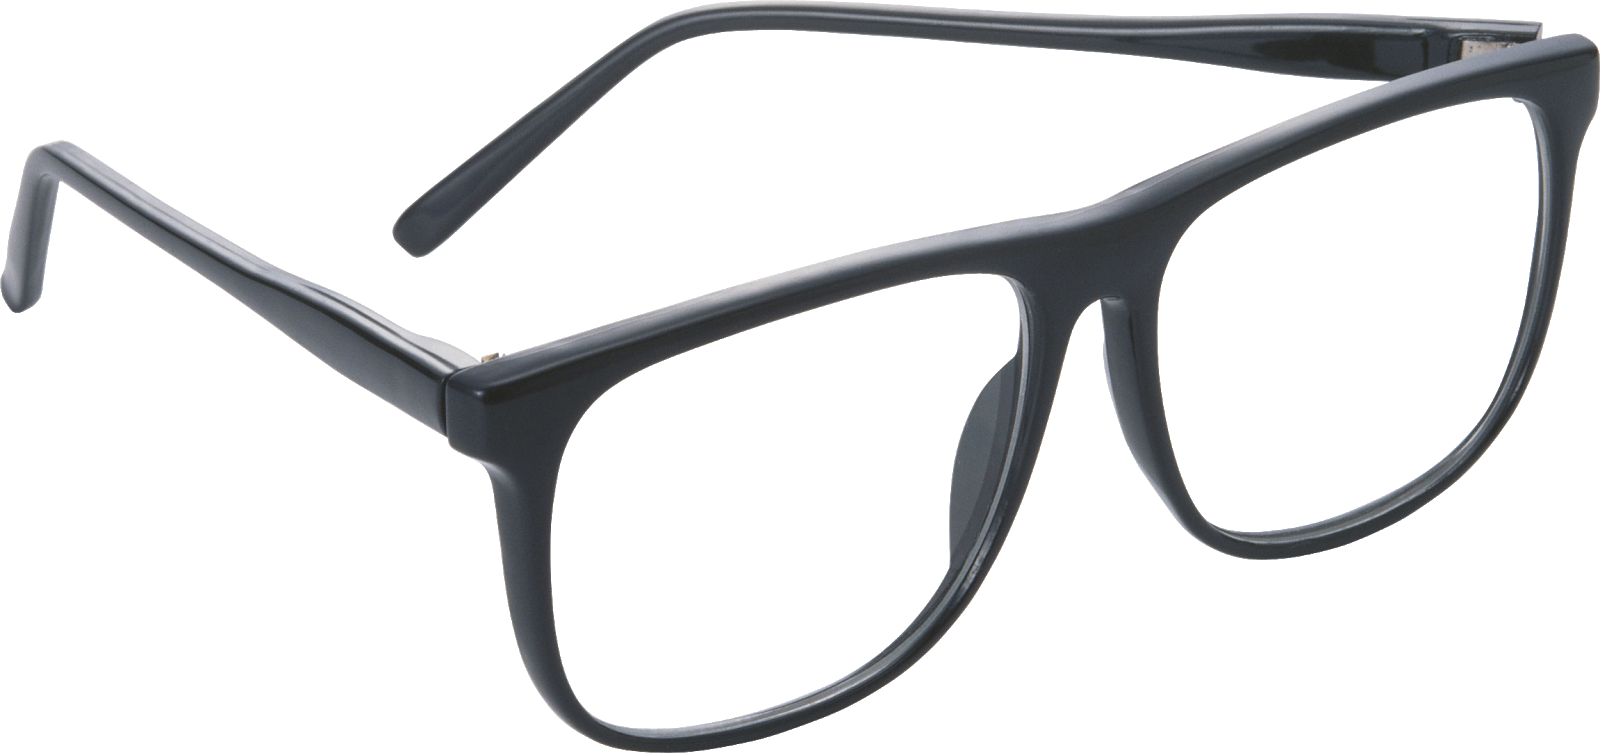 Black Modern Eyeglasses Isolated PNG